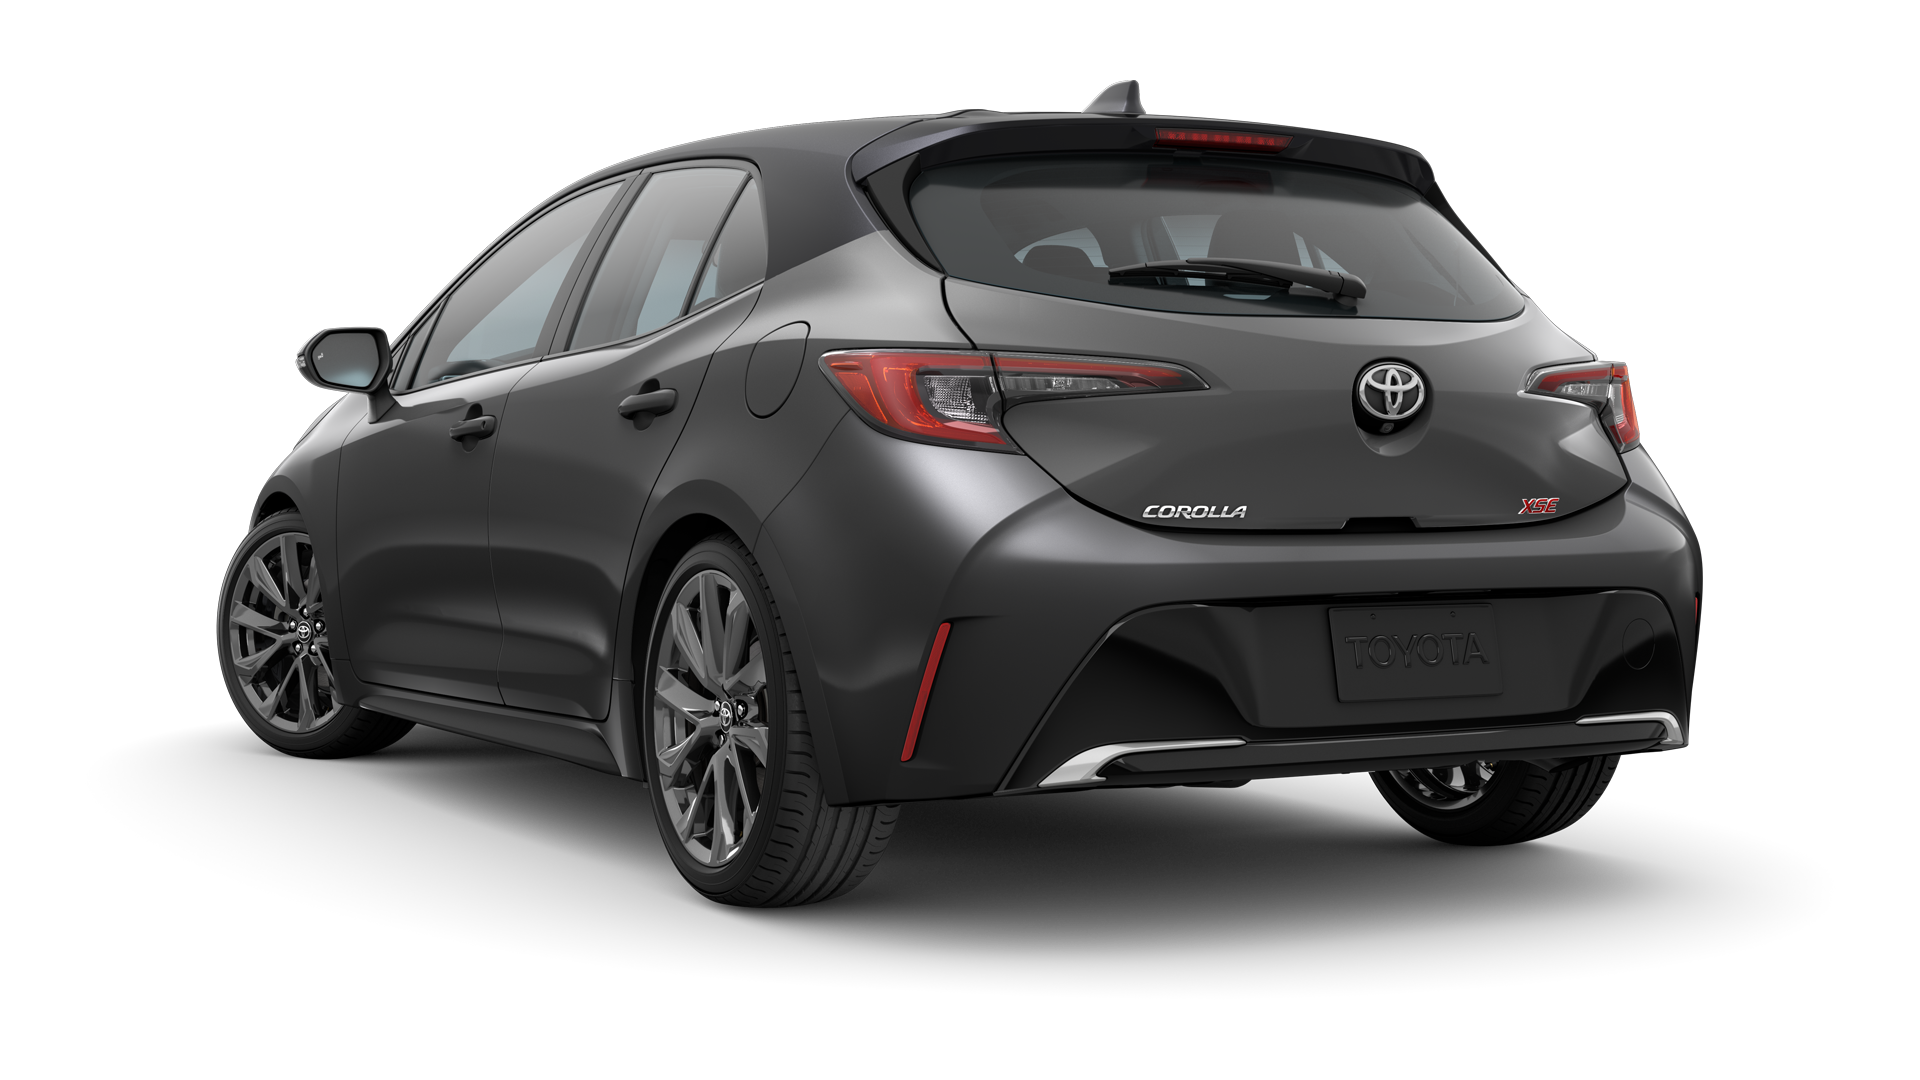 2024 Toyota Hatchback in Magnetic Gray Metallic/Midnight Black Metallic Roof.